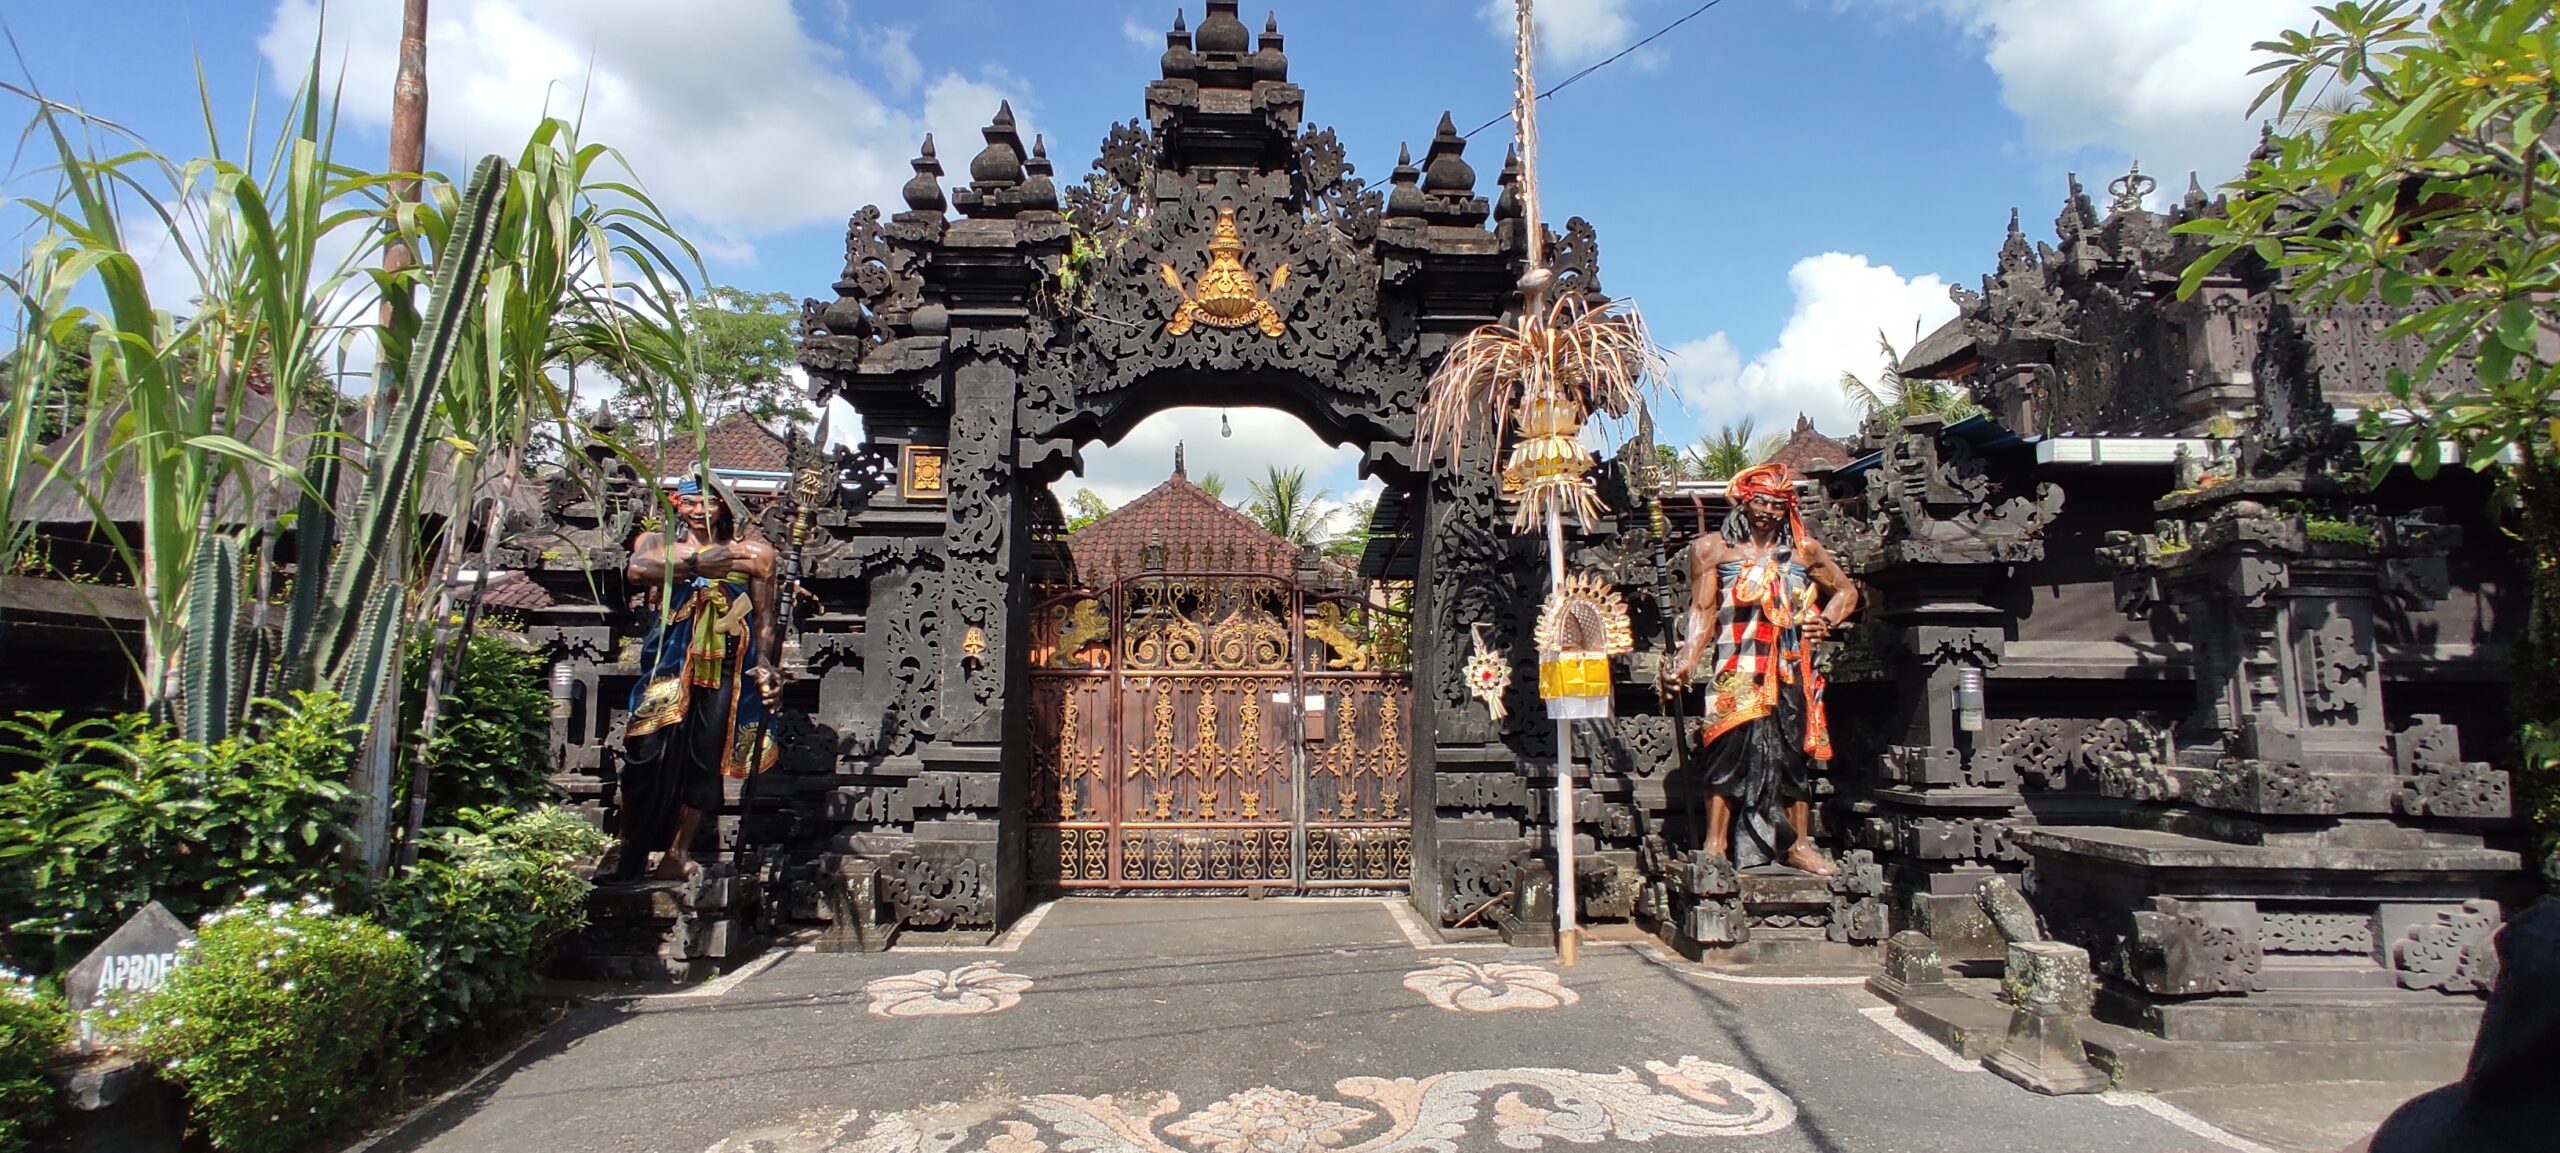 Bali blogi 5. osa : Ubud